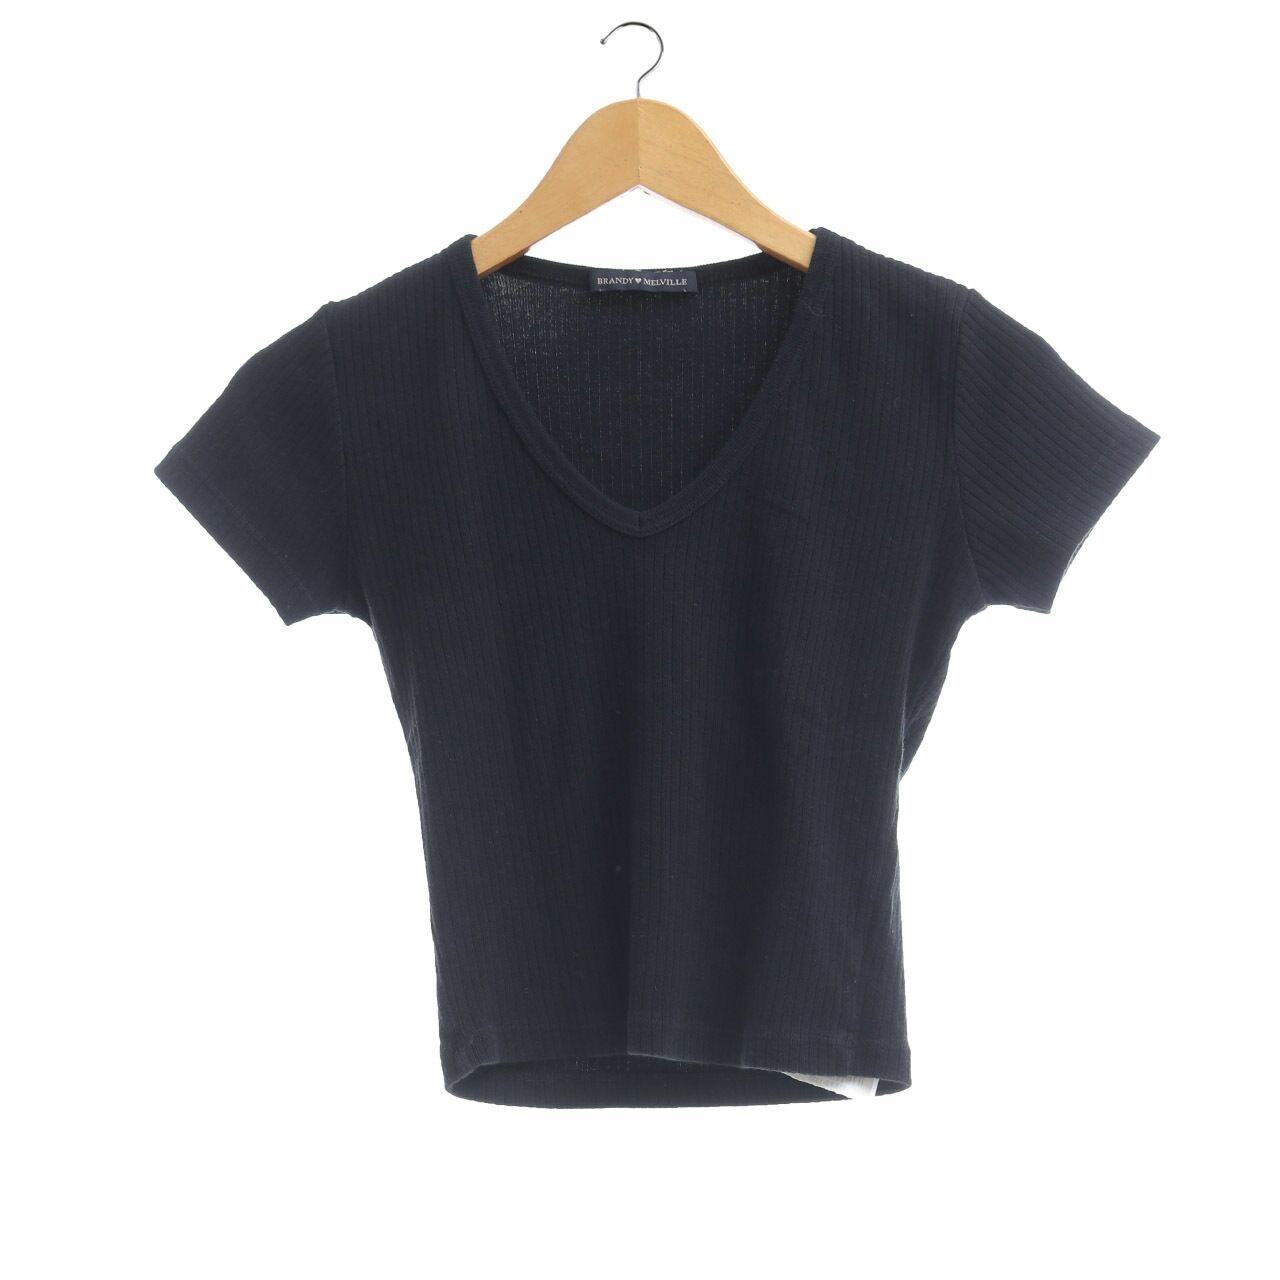 Brandy Melville Black Cropped T-Shirt